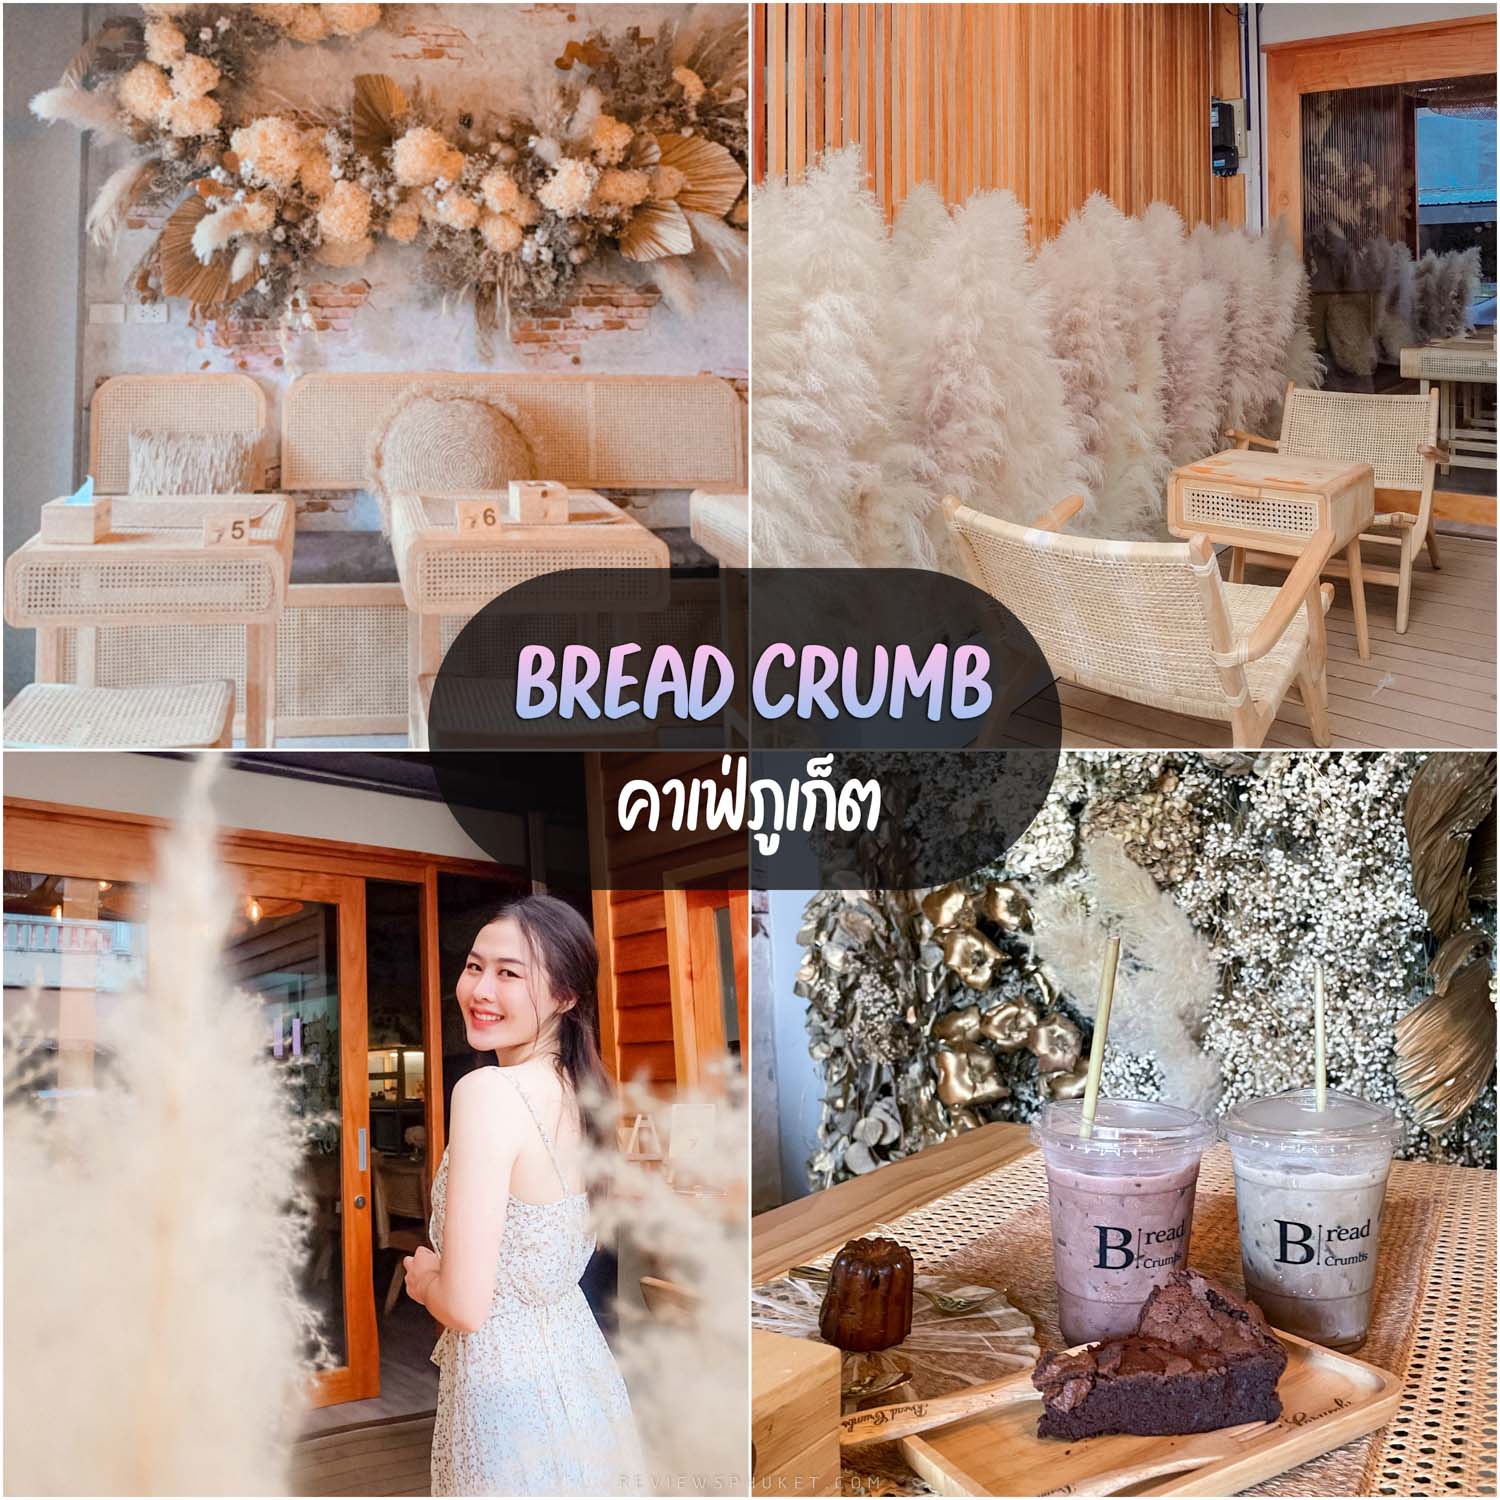 Bread crumbs Cafe คาเฟ่ภูเก็ต ตกแต่งน่ารักเครื่องดื่มเบเกอรี่อร่อยย